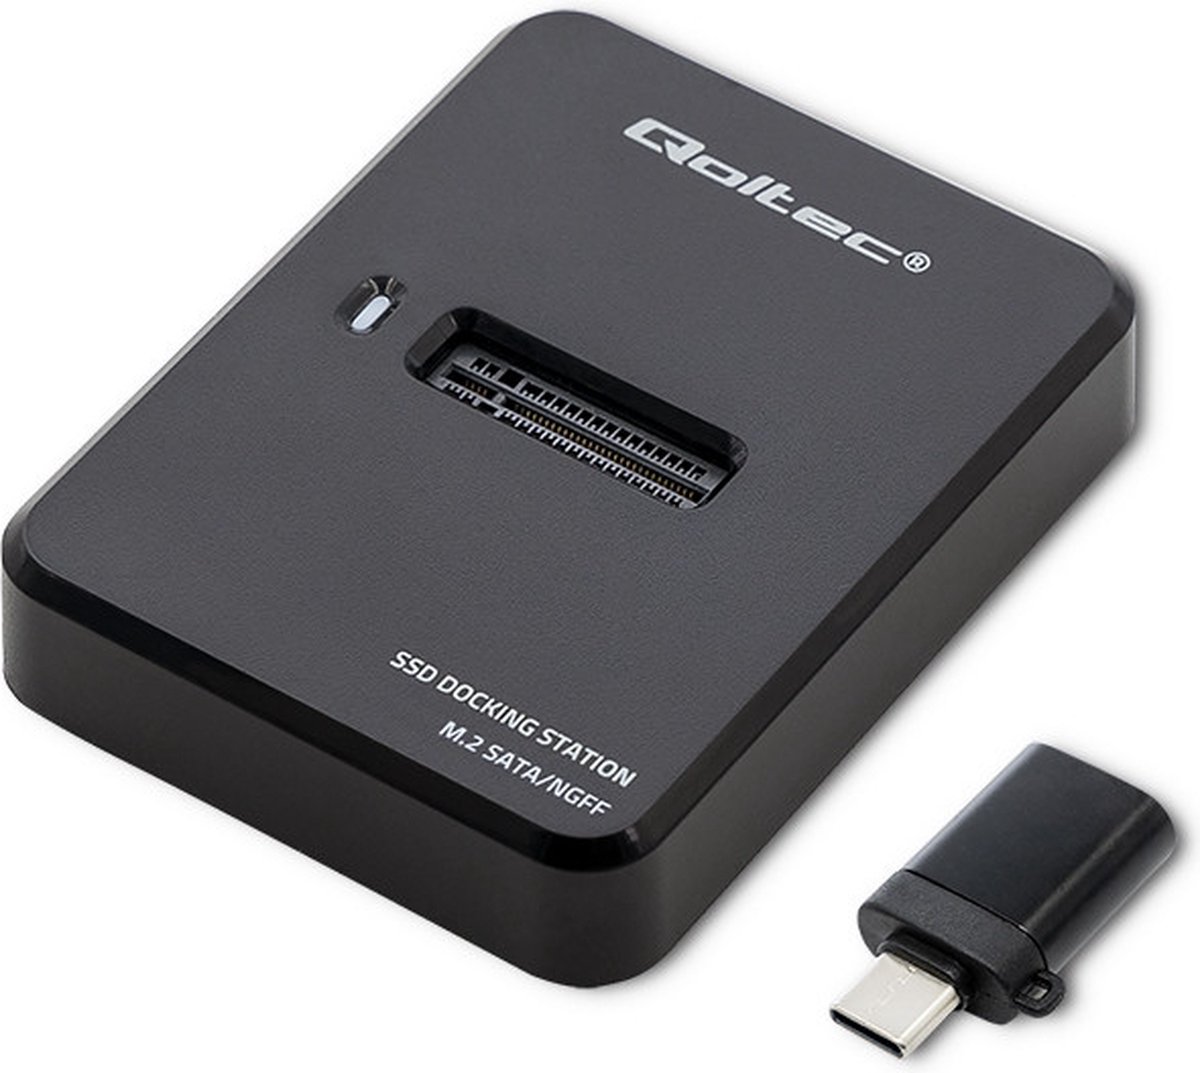 Qoltec Dockingstation SSD M.2 SATA| NGFF | USB 3.1.